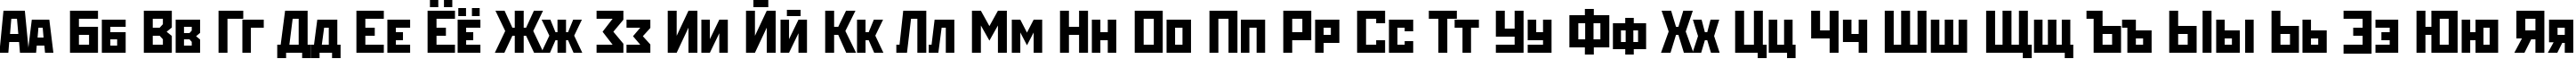 Пример написания русского алфавита шрифтом RodchenkoCTT